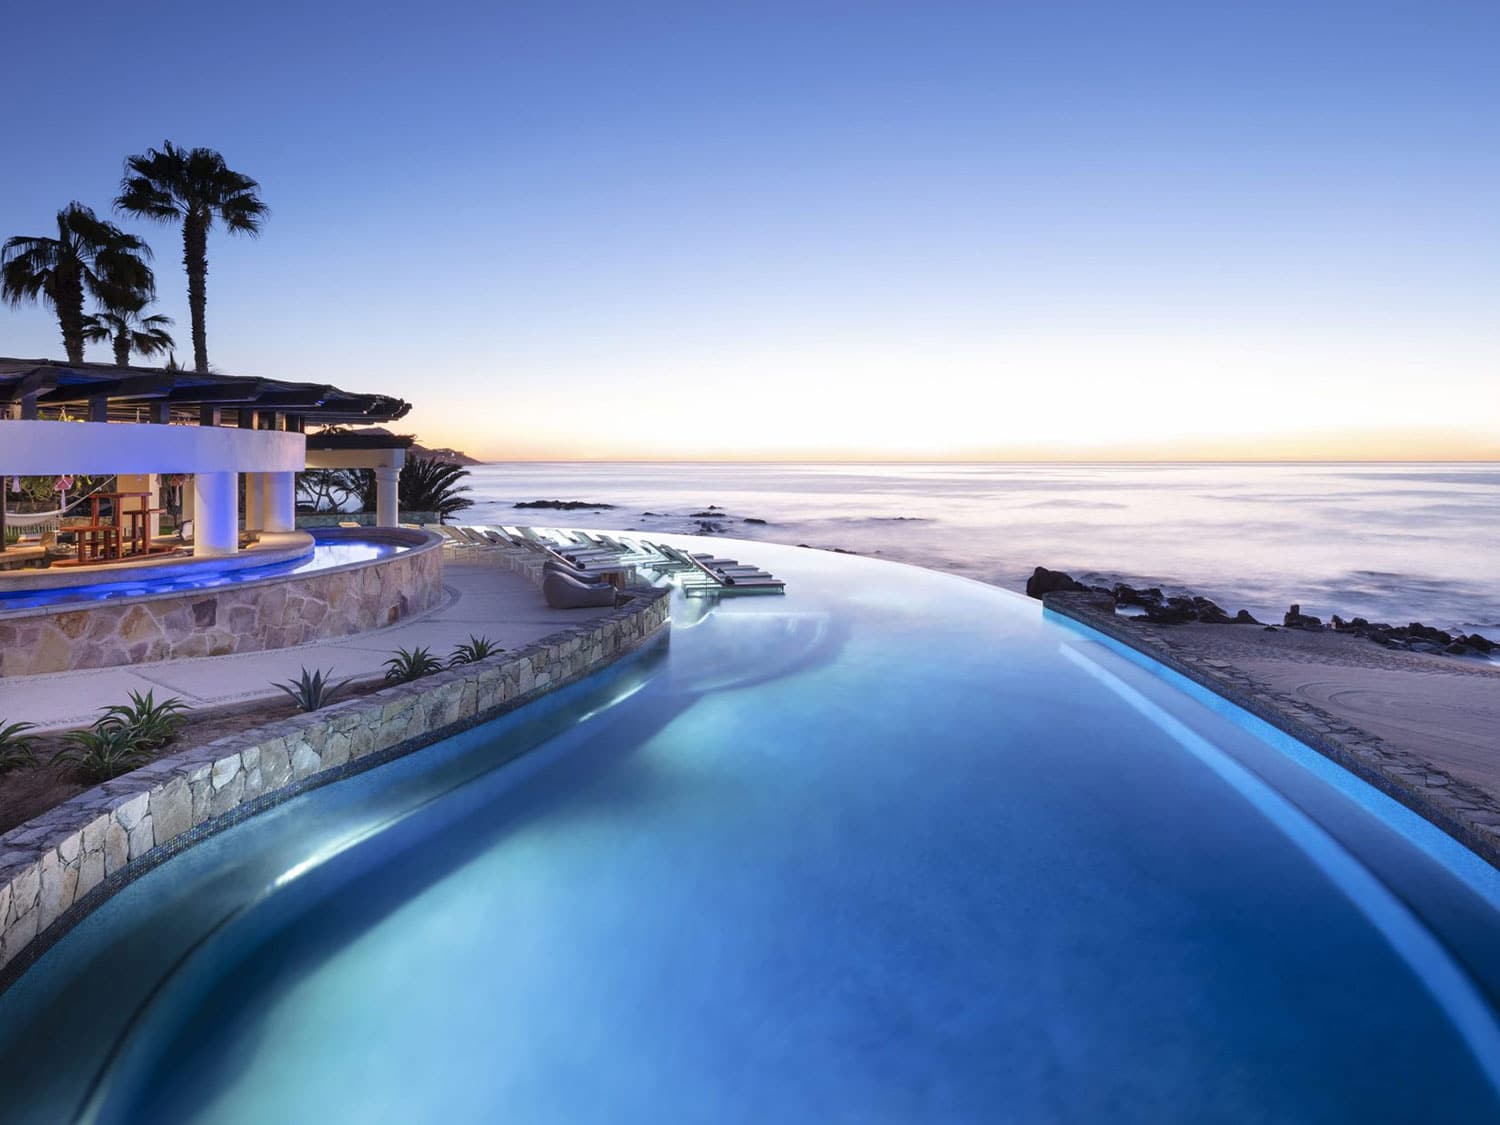 A luxury resort-style pool overlooking the ocean.